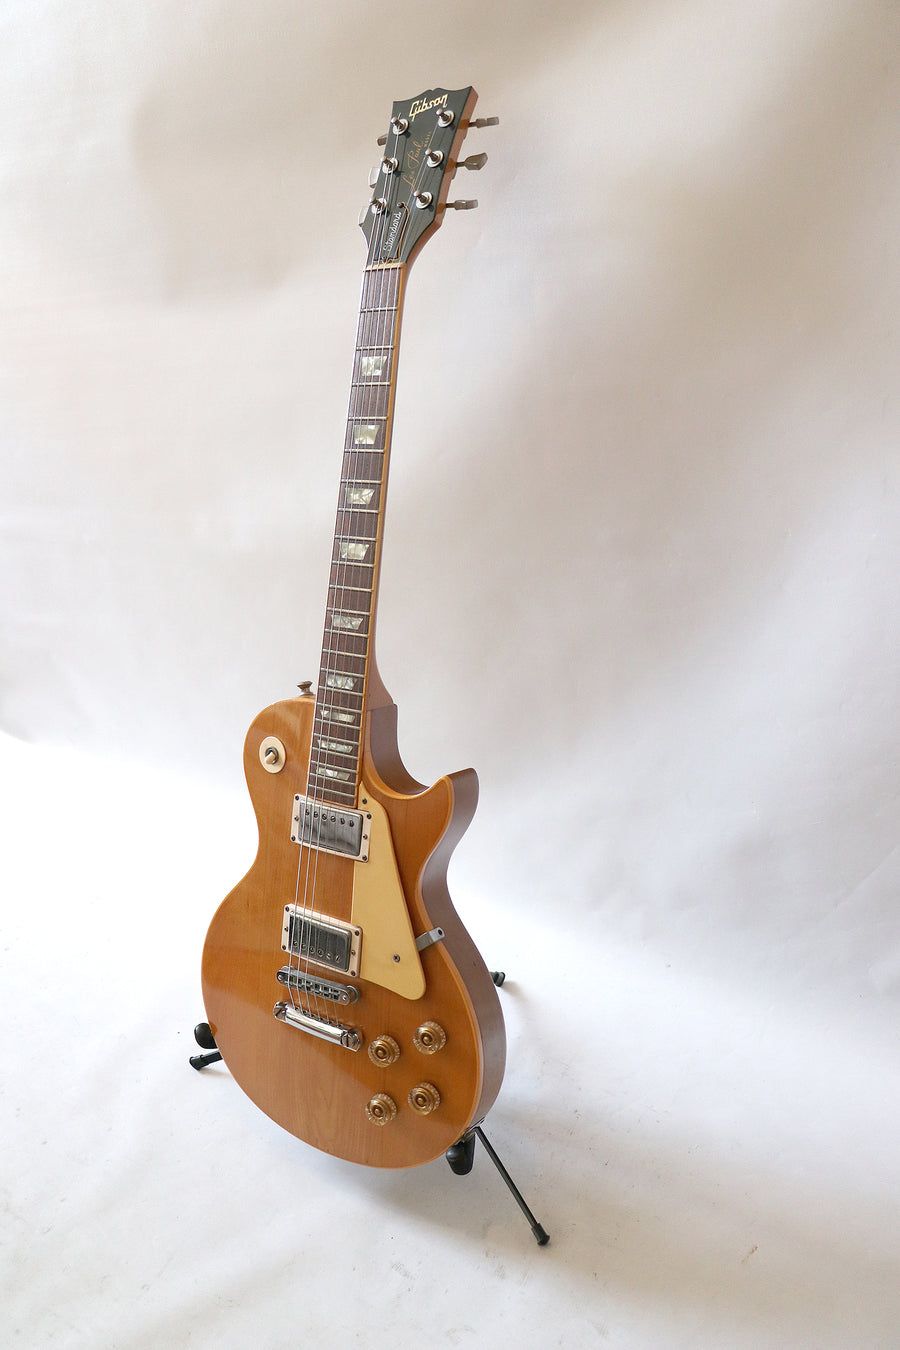 Gibson Les Paul Standard 1979